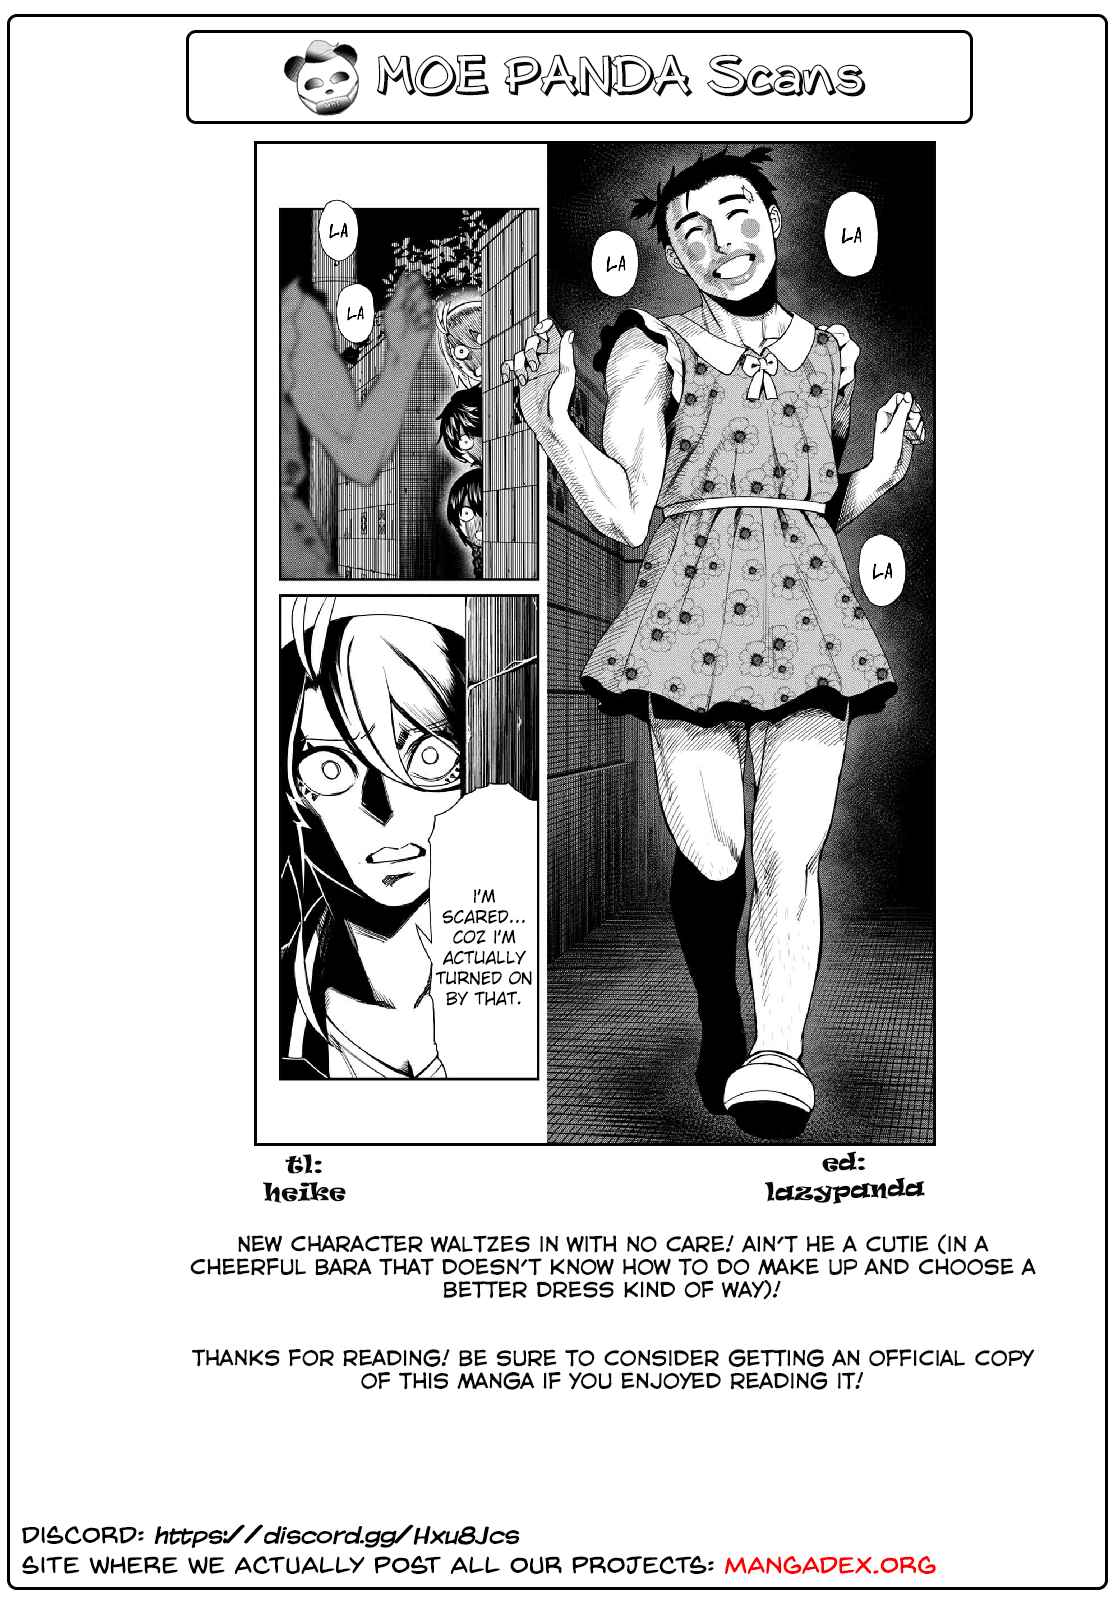 Furyou Taimashi Reina Vol. 1 Ch. 8 Exorcism #8 The Tall Girl